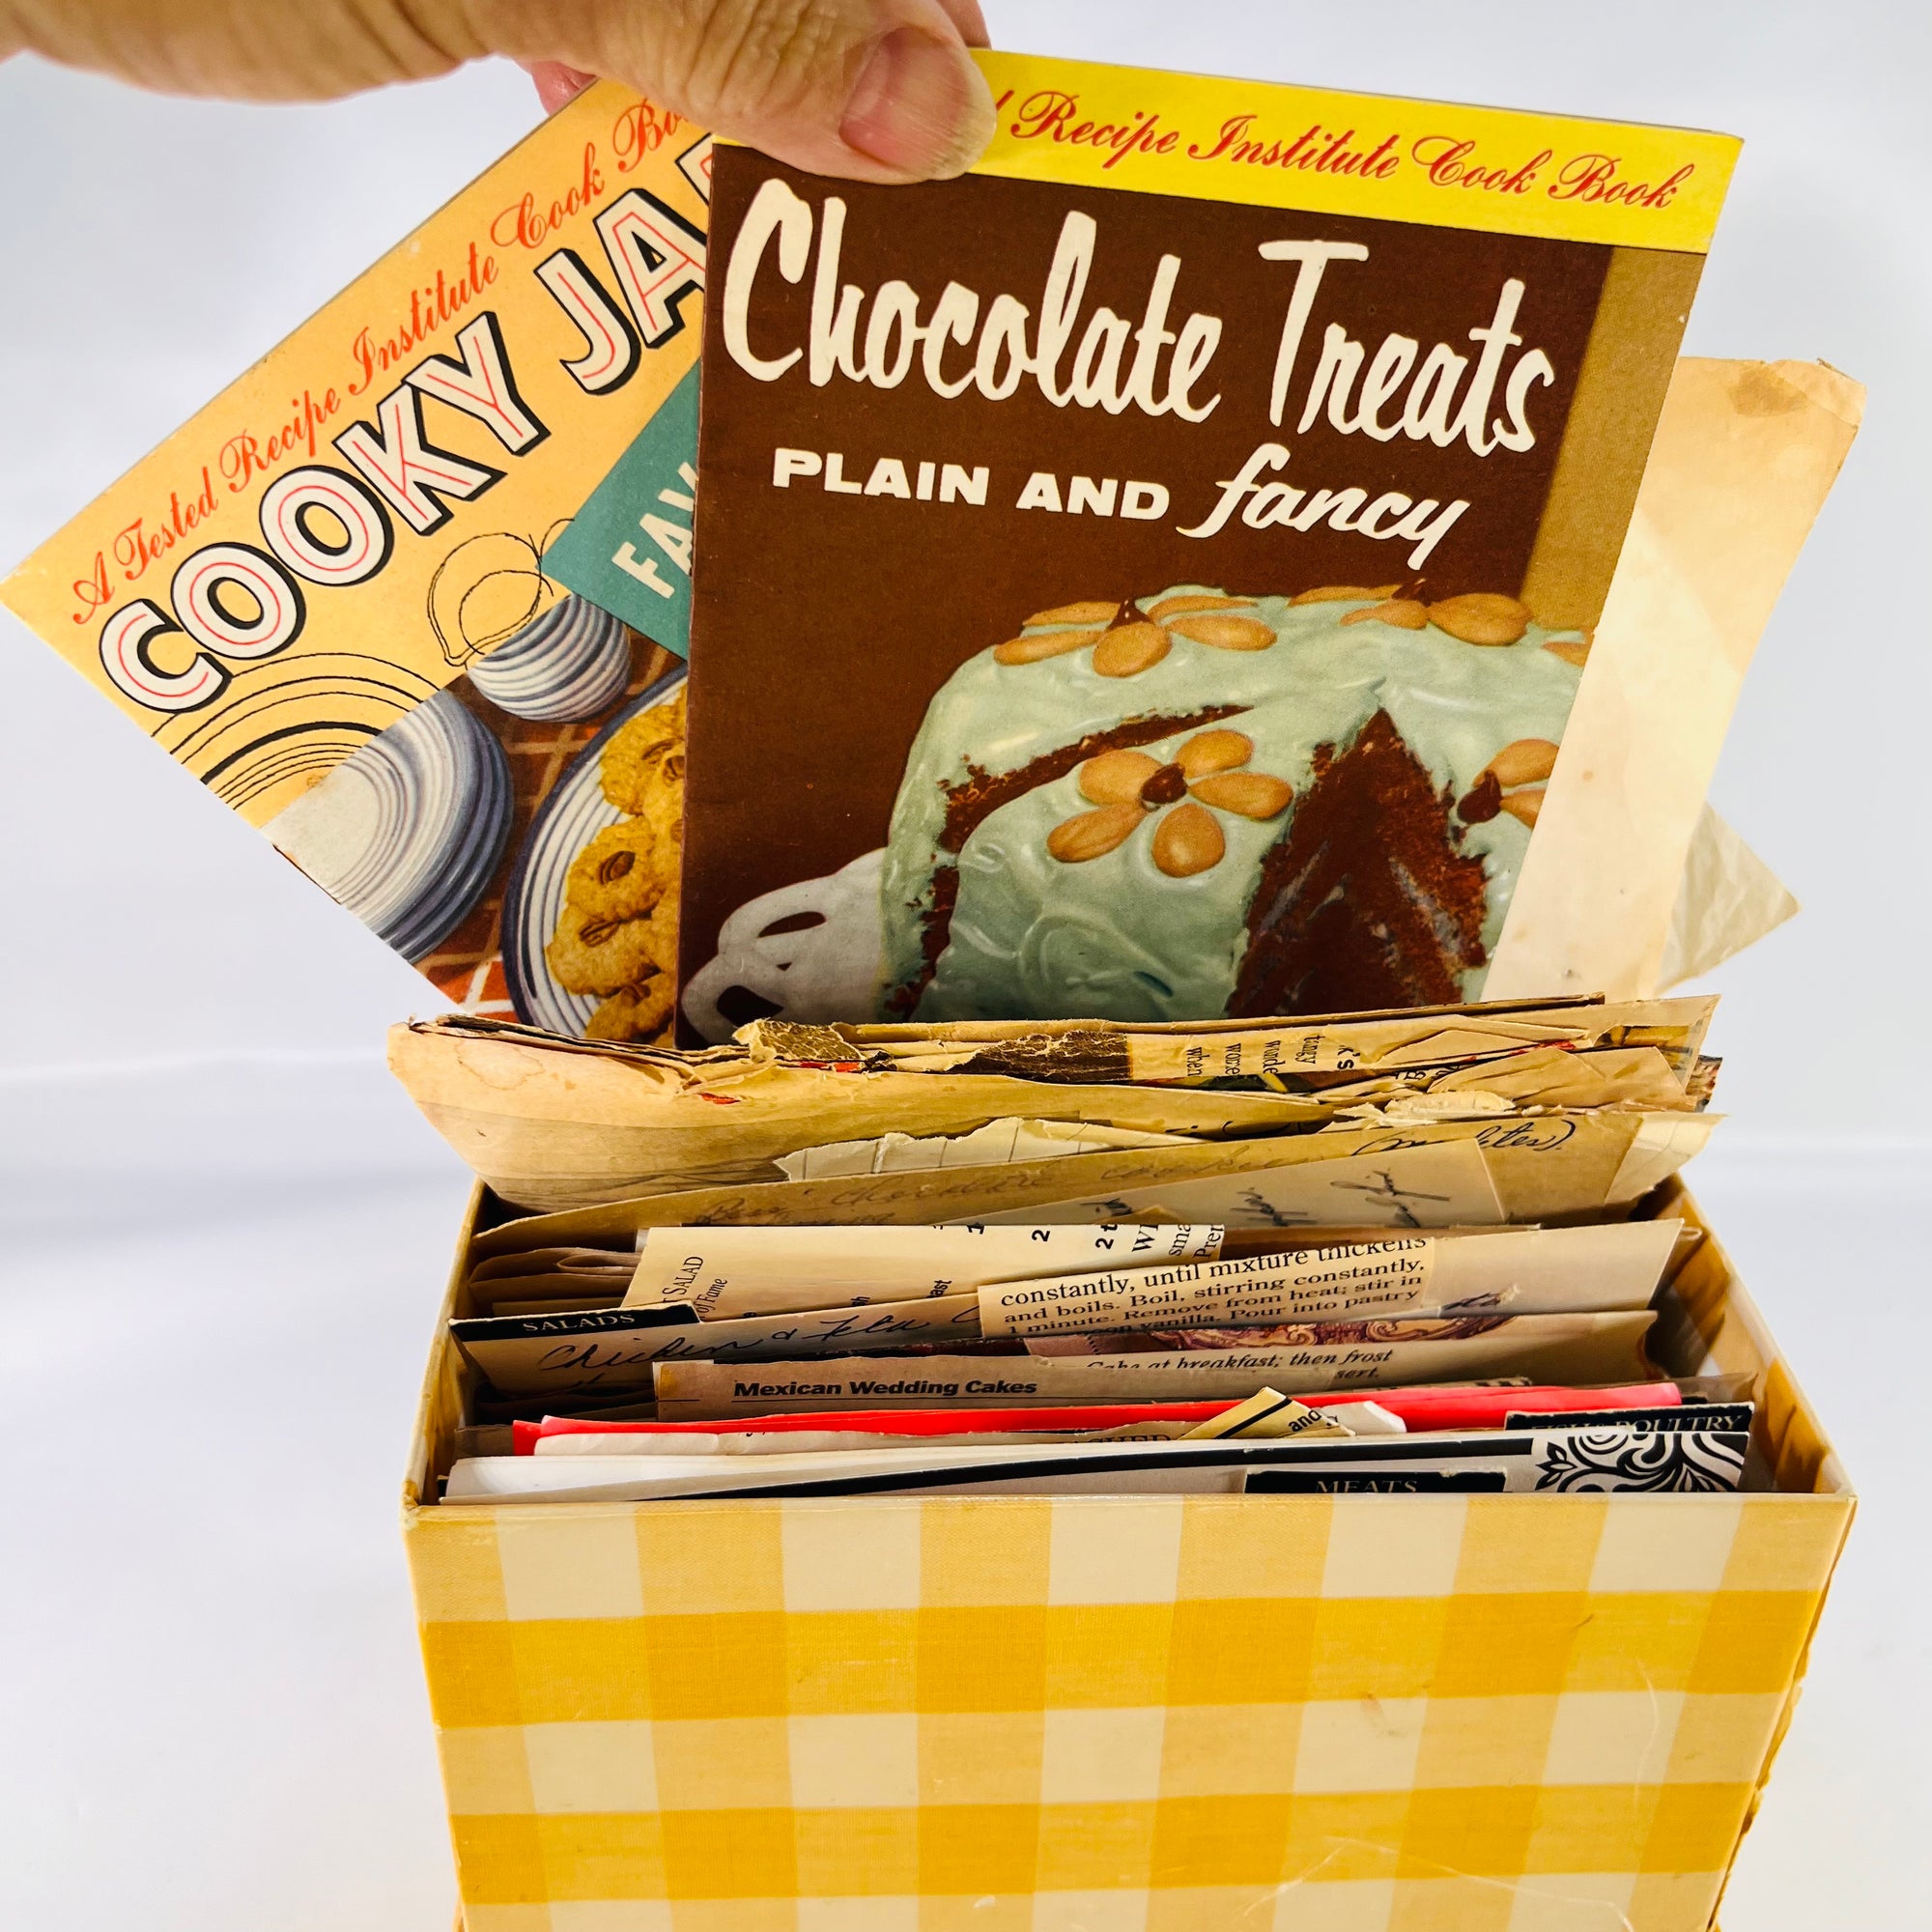 Vintage Recipe Box Packed Full of Handwritten & Newspaper Recipes